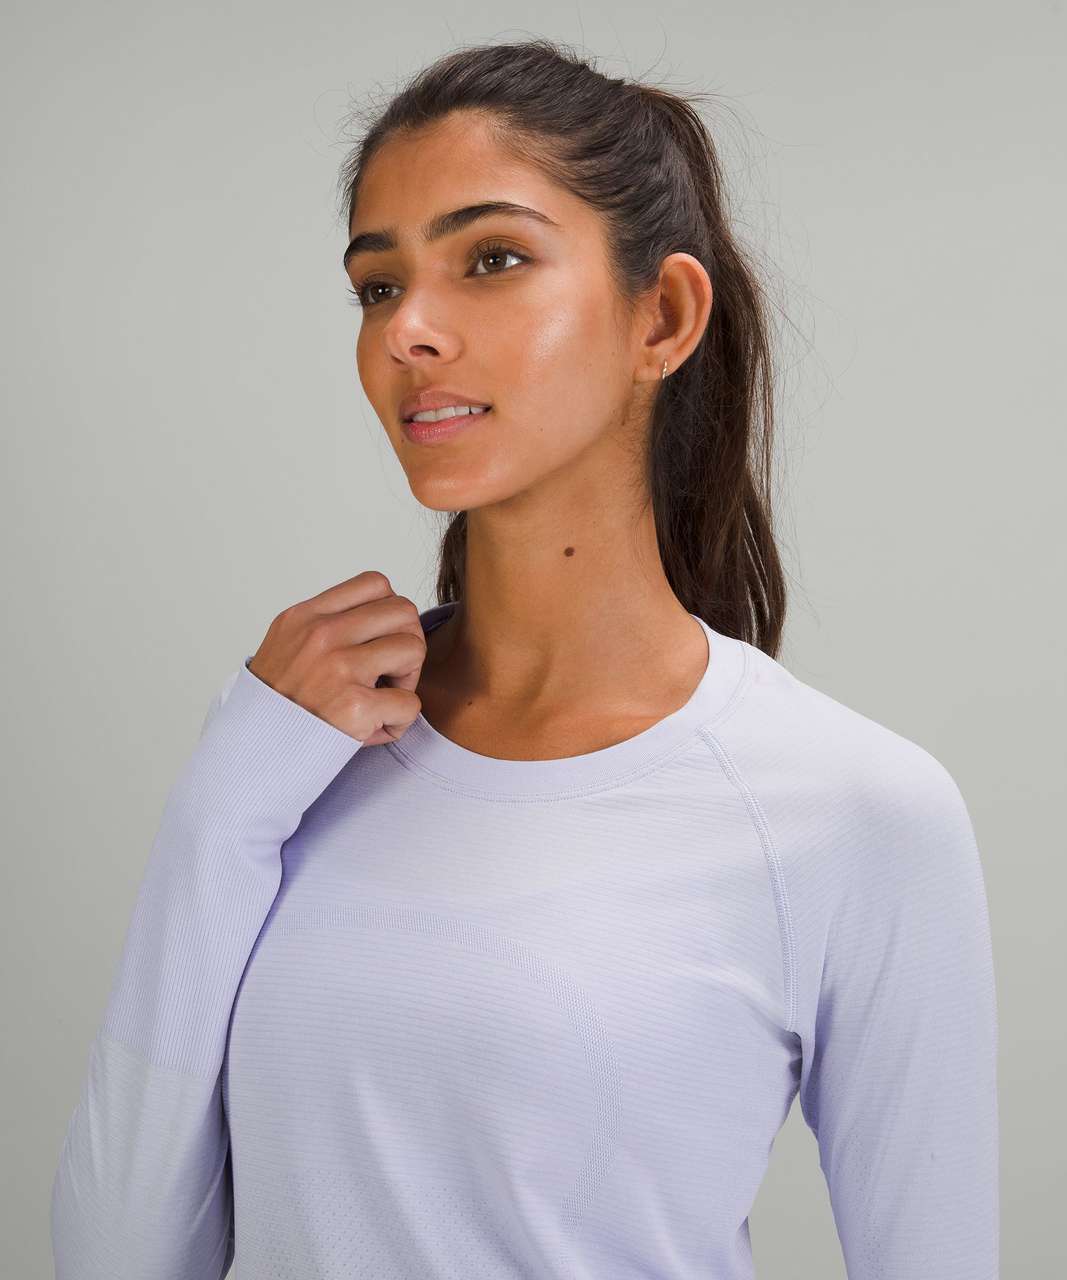 Lululemon Swiftly Tech Long Sleeve Shirt 2.0 *Race Length - Pastel Blue / Pastel Blue